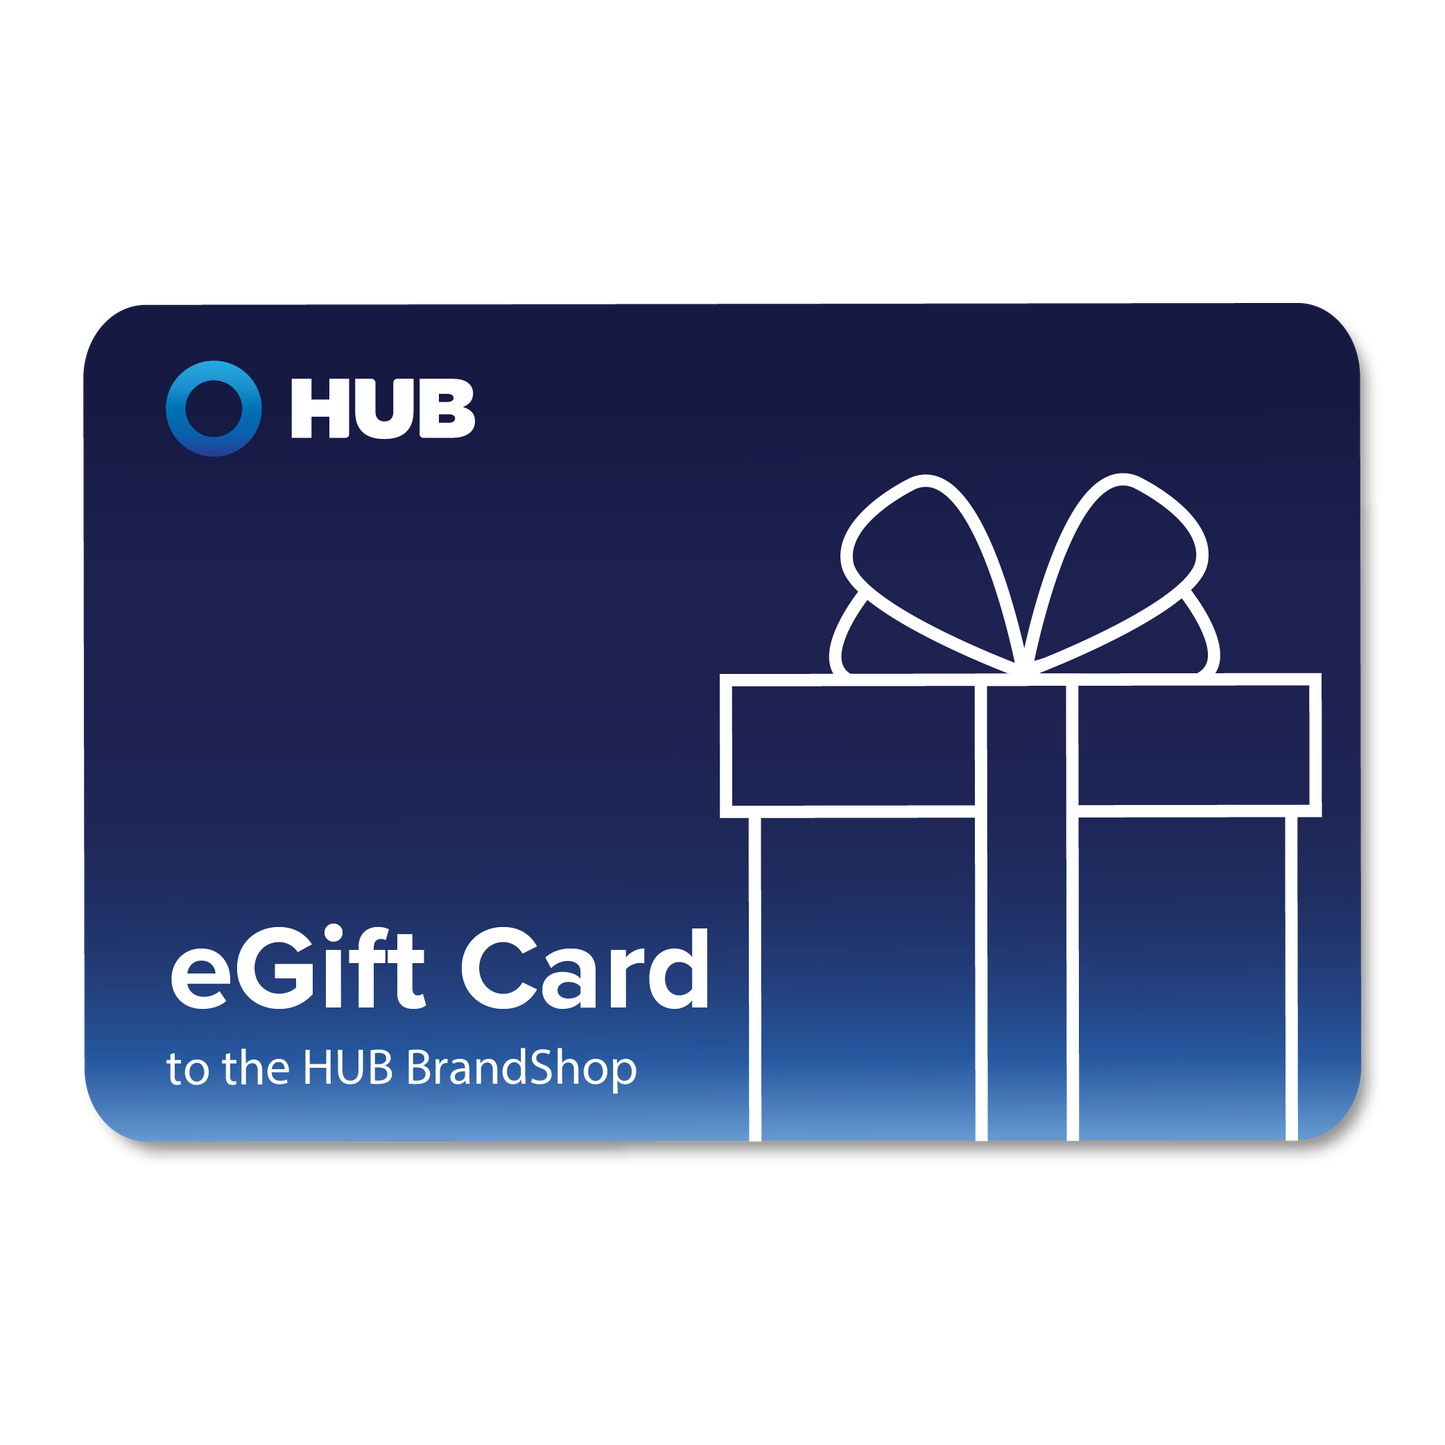 HUB BrandShop eGift Card